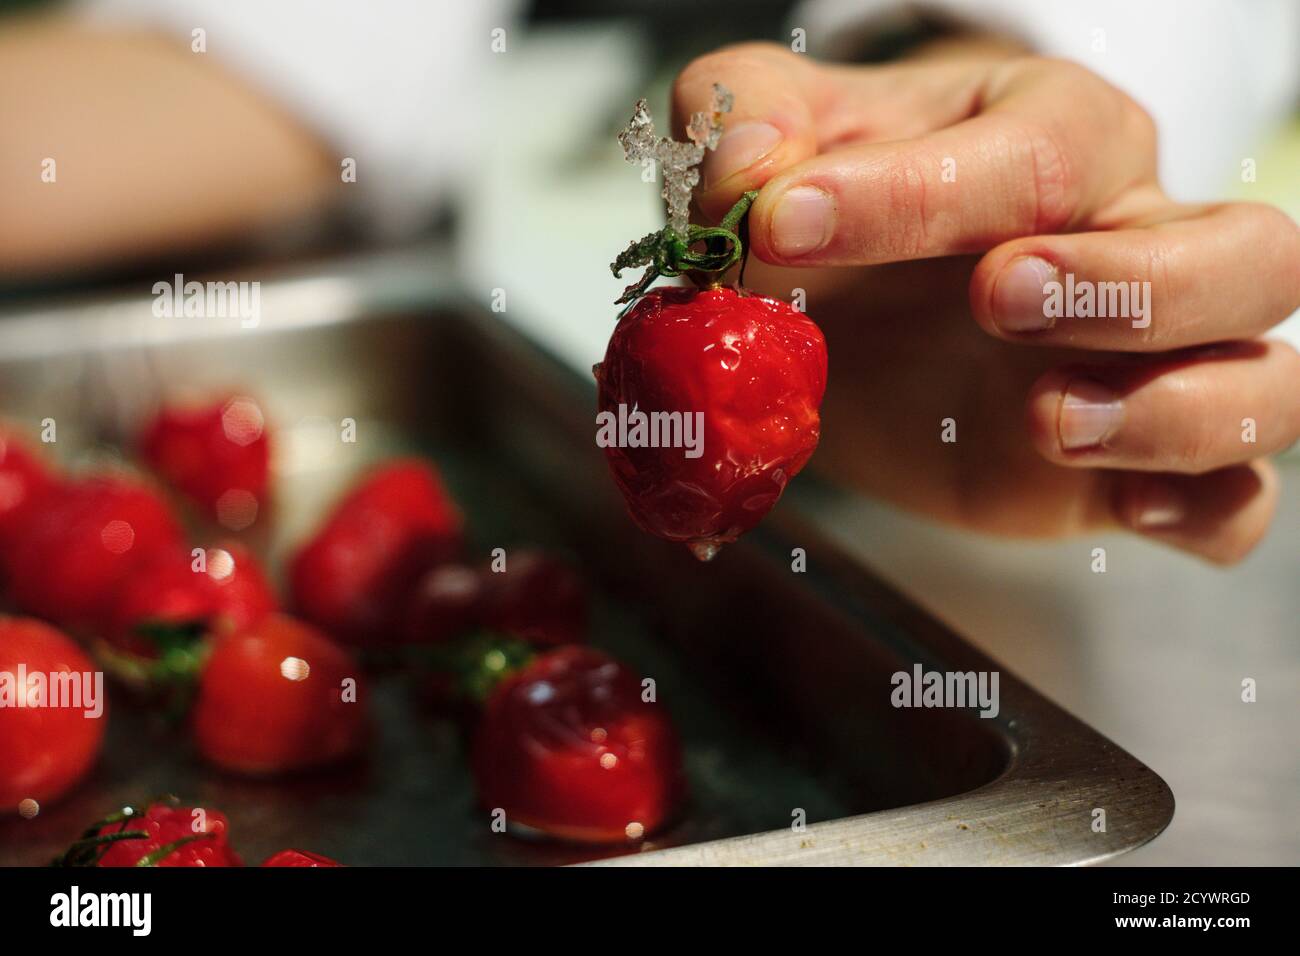 tomate cherry confitado, Mallorca,Islas Baleares,Spain. Stock Photo